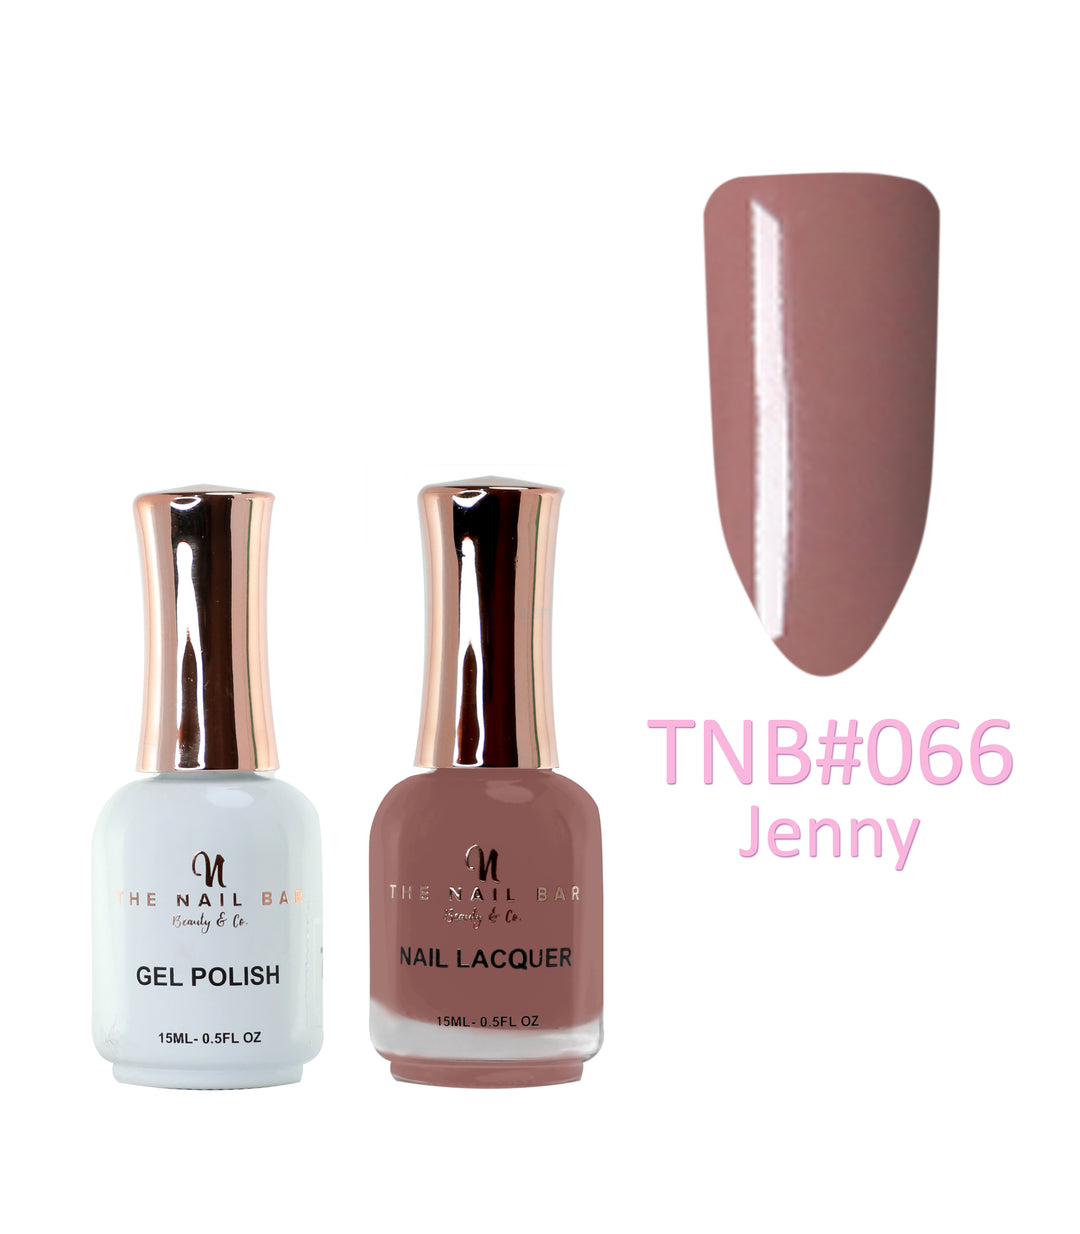 Dual Polish/Gel colour matching (15ml) - Jenny - The Nail Bar Beauty & Co.